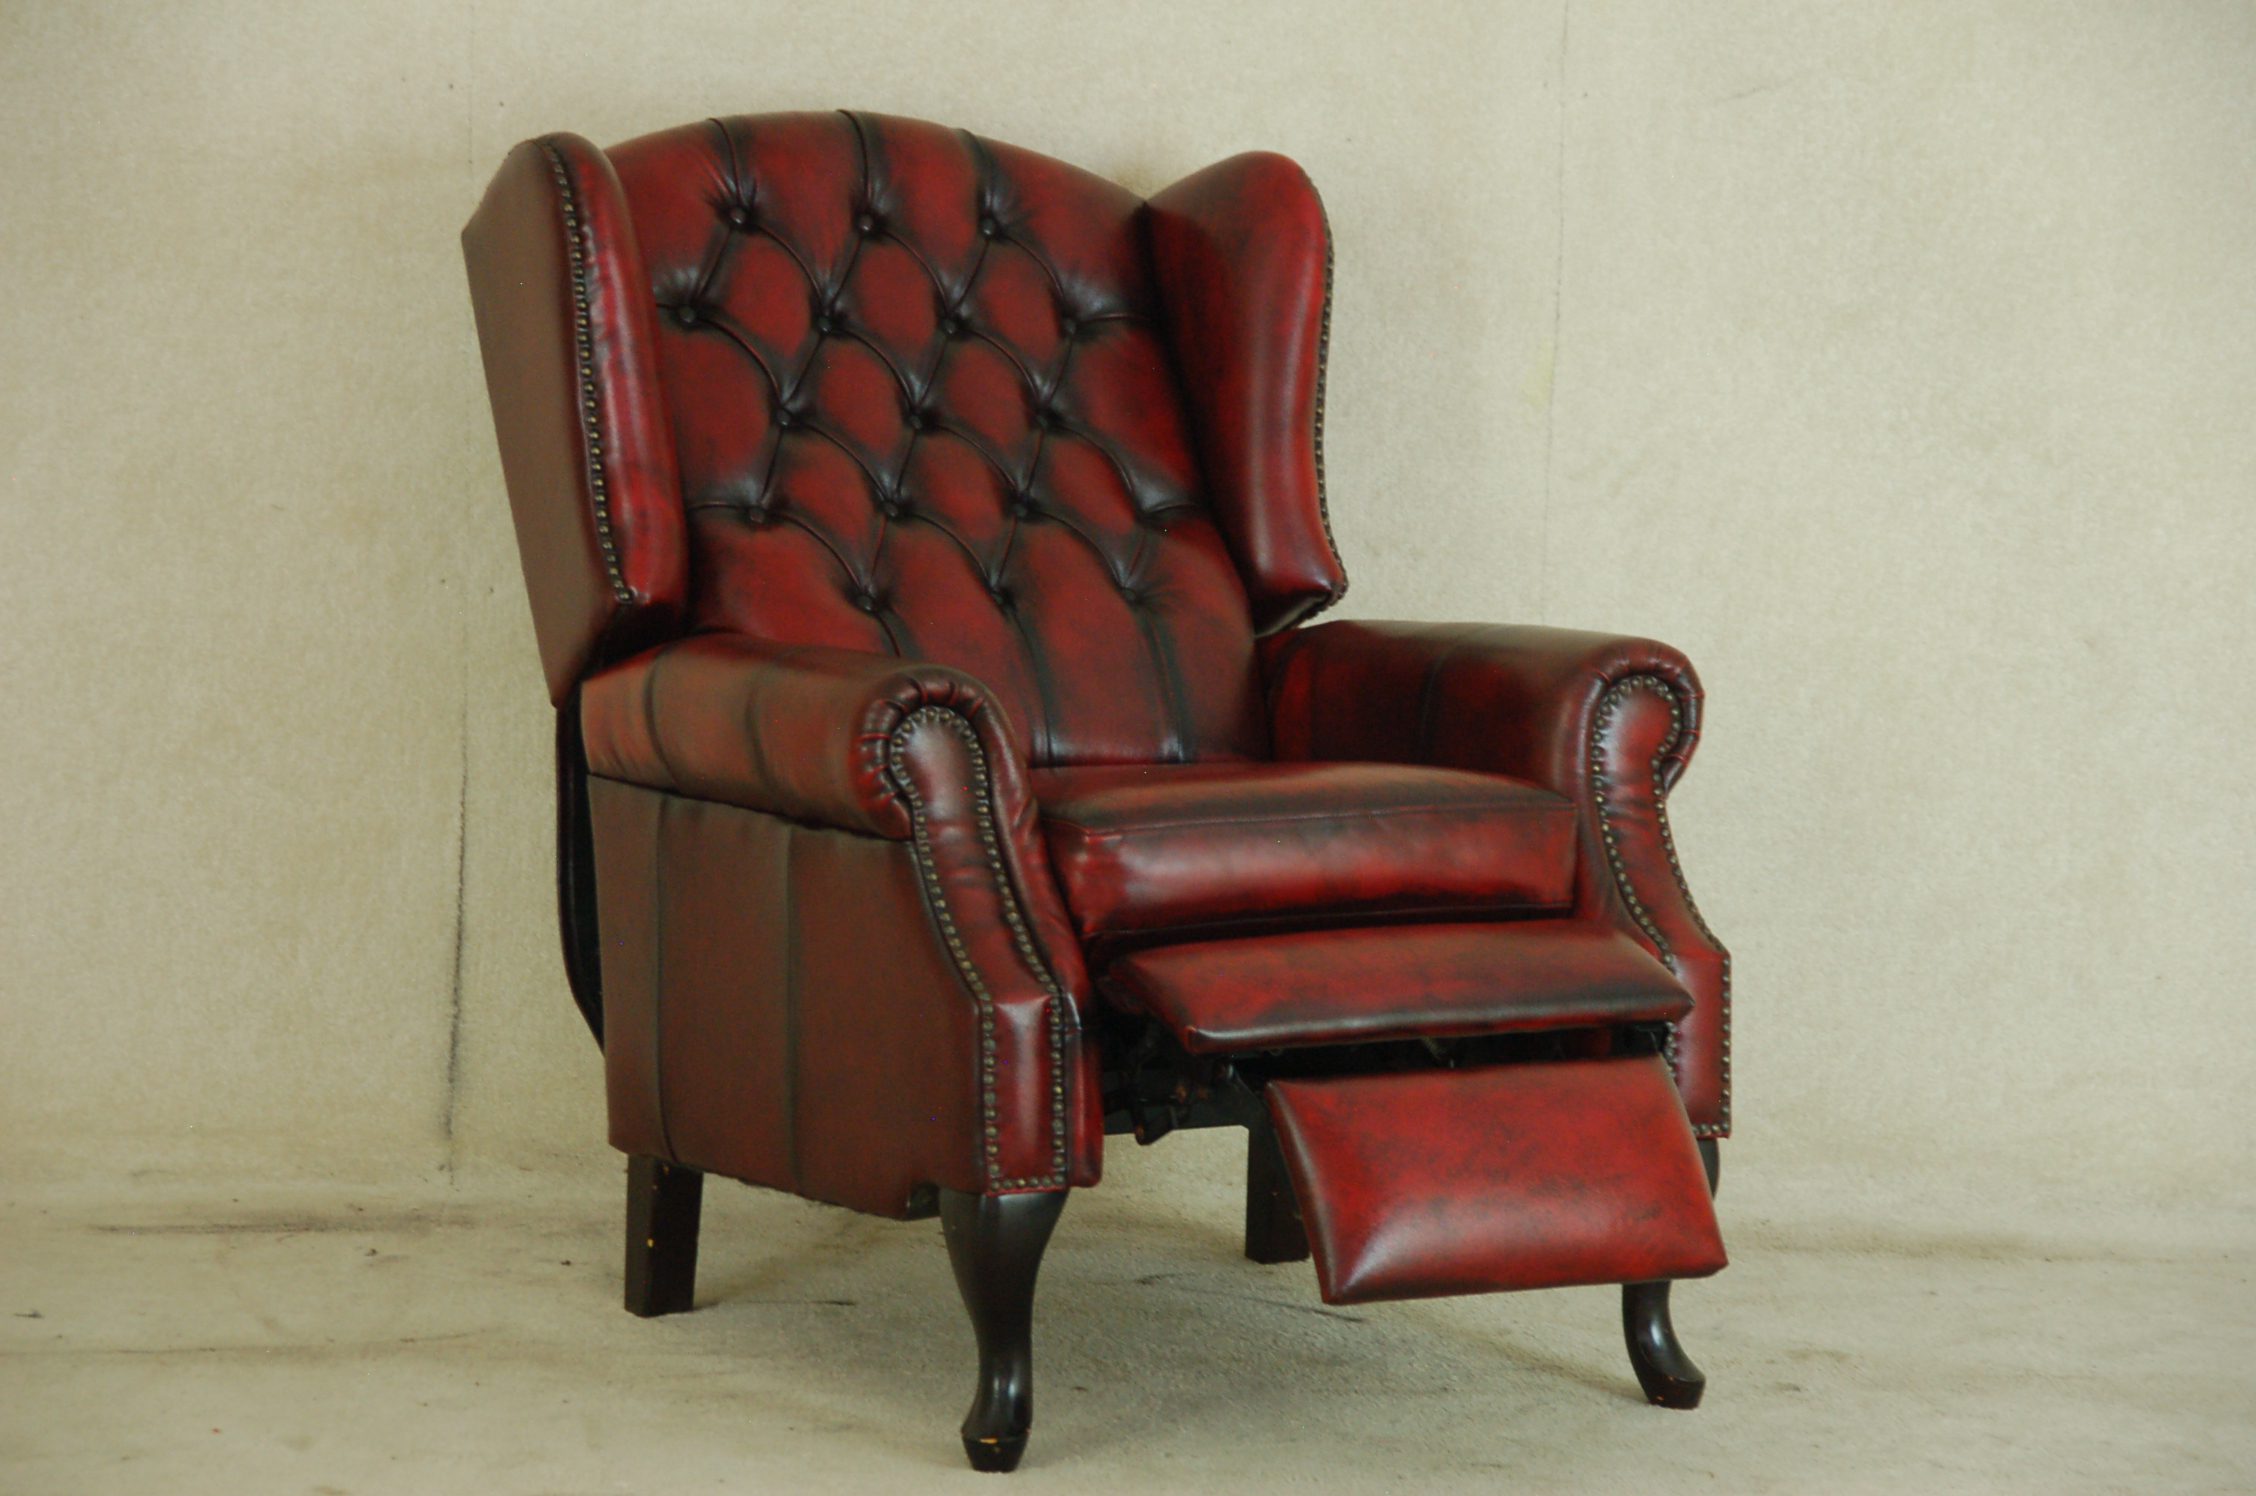 rode gebruikte chesterfield relax stoel